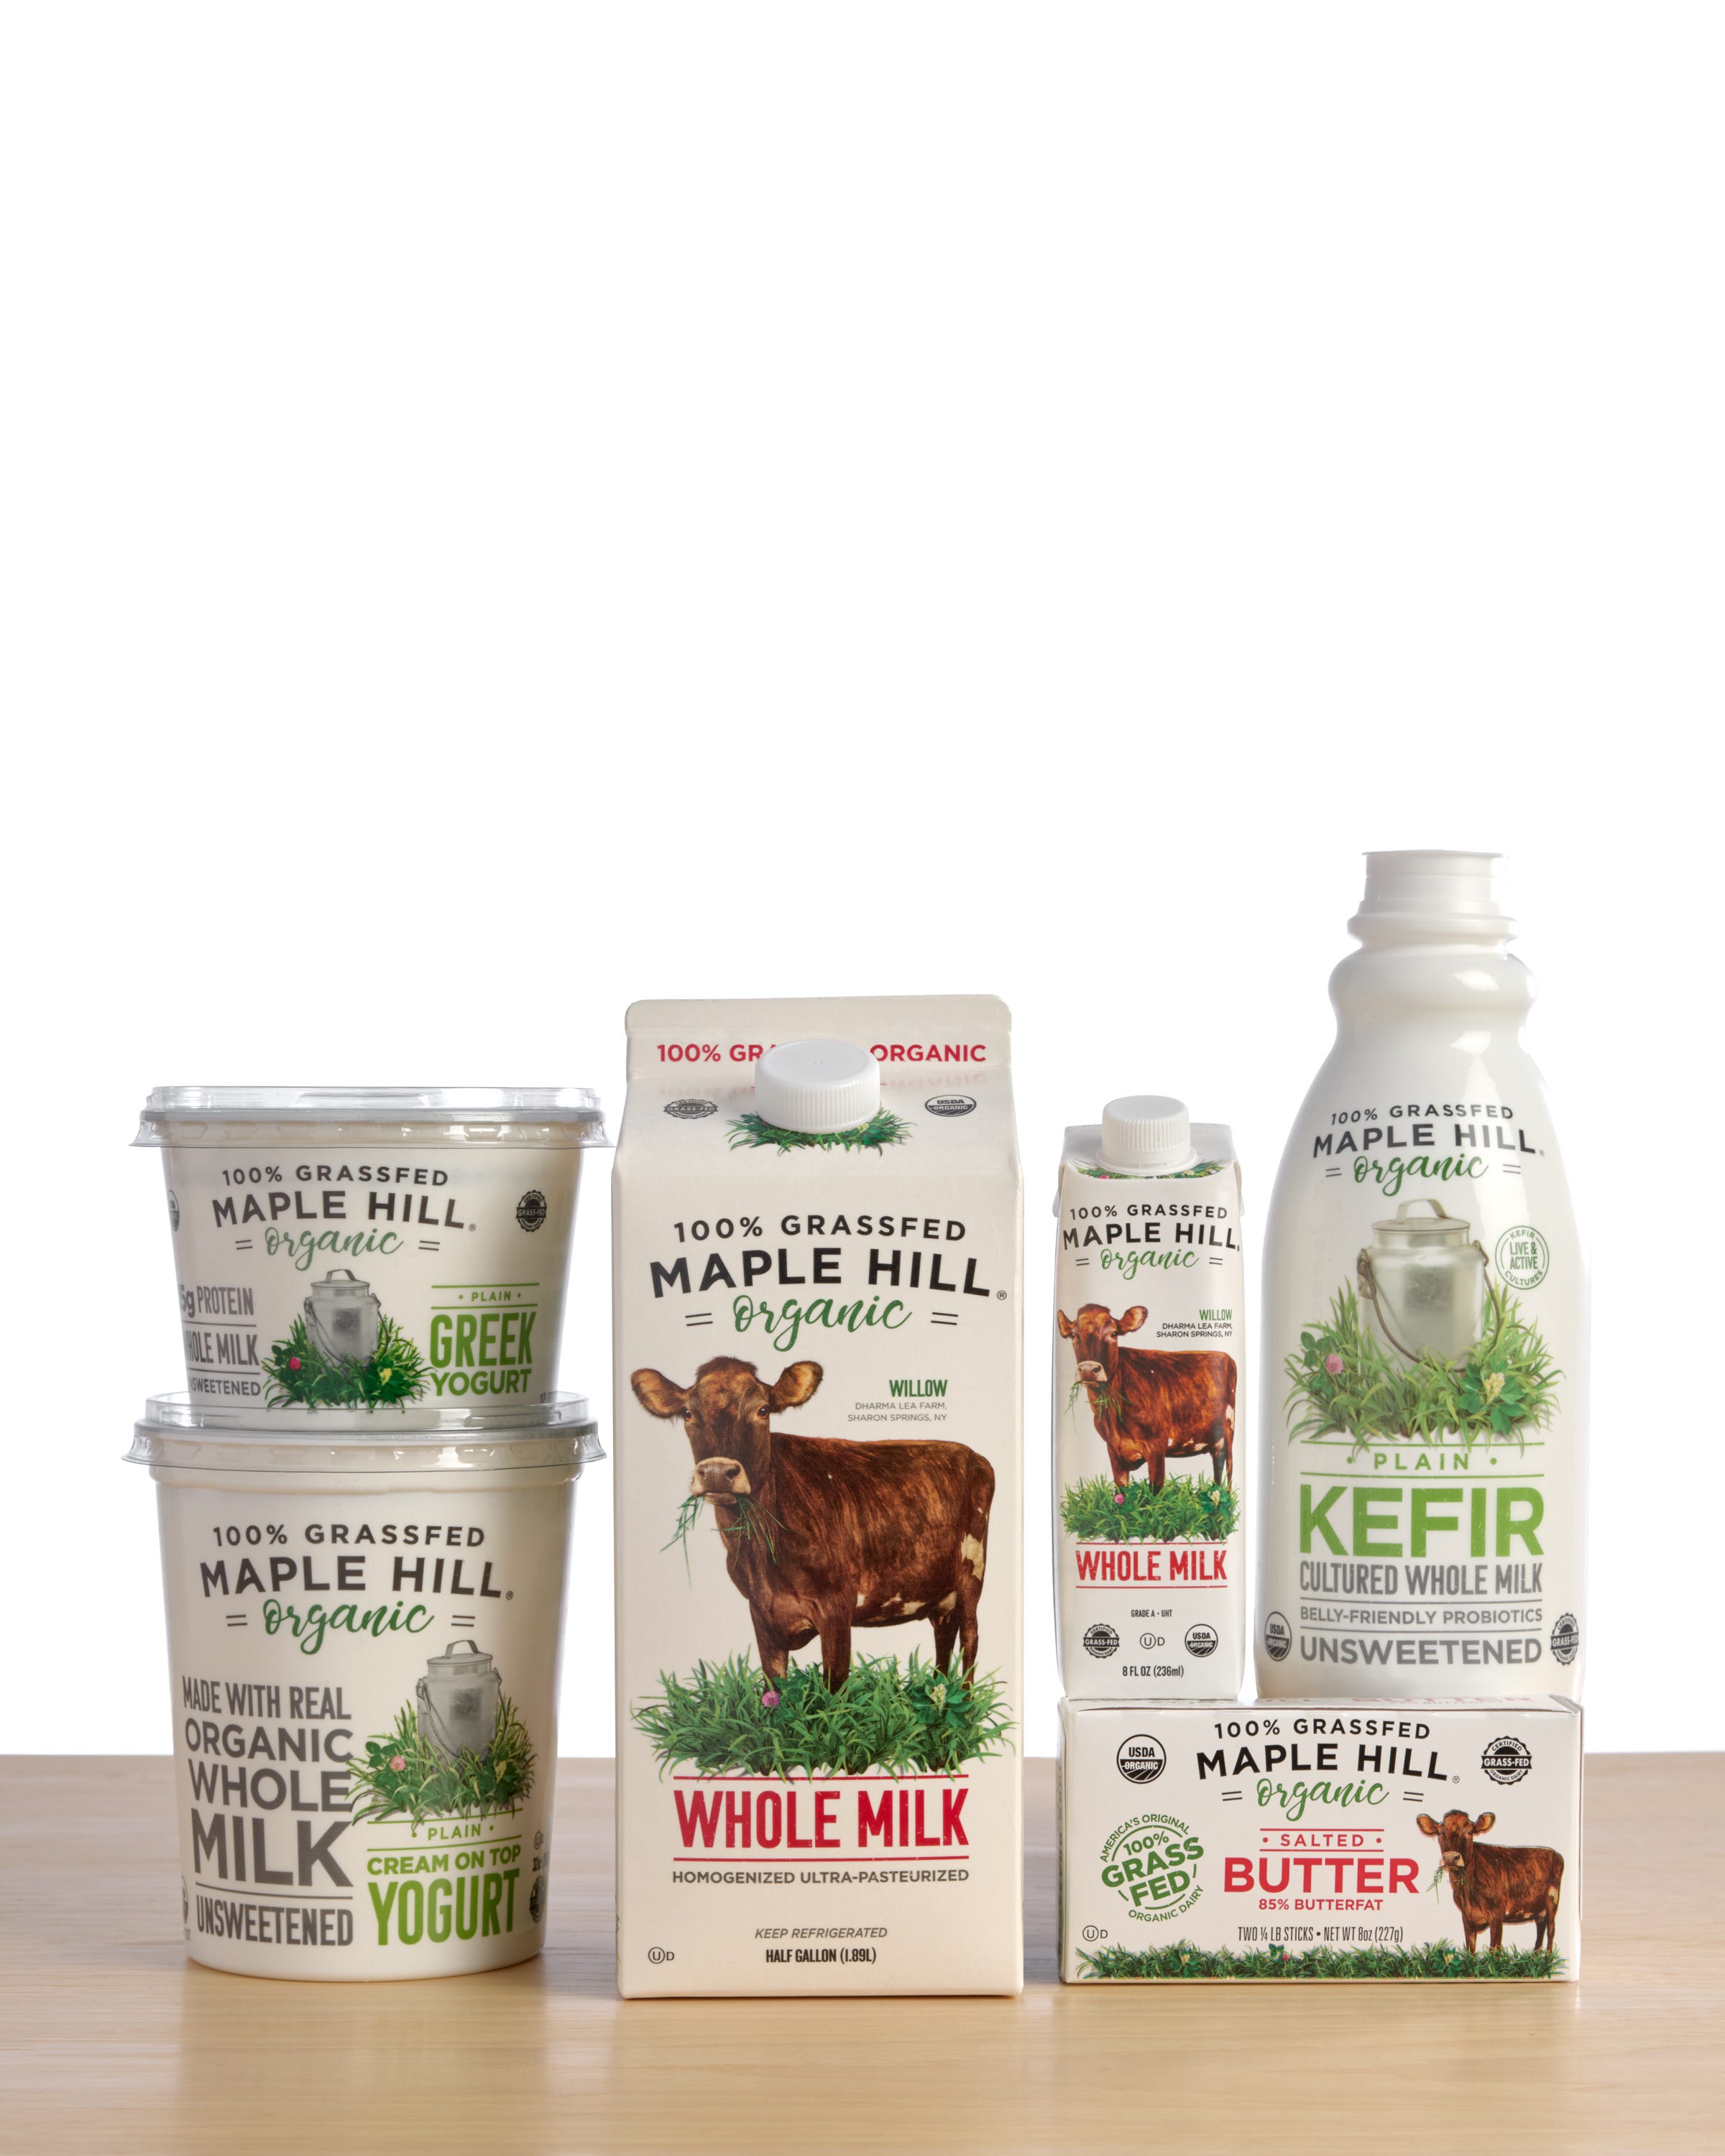 Grass Fed Organic Jersey Milk